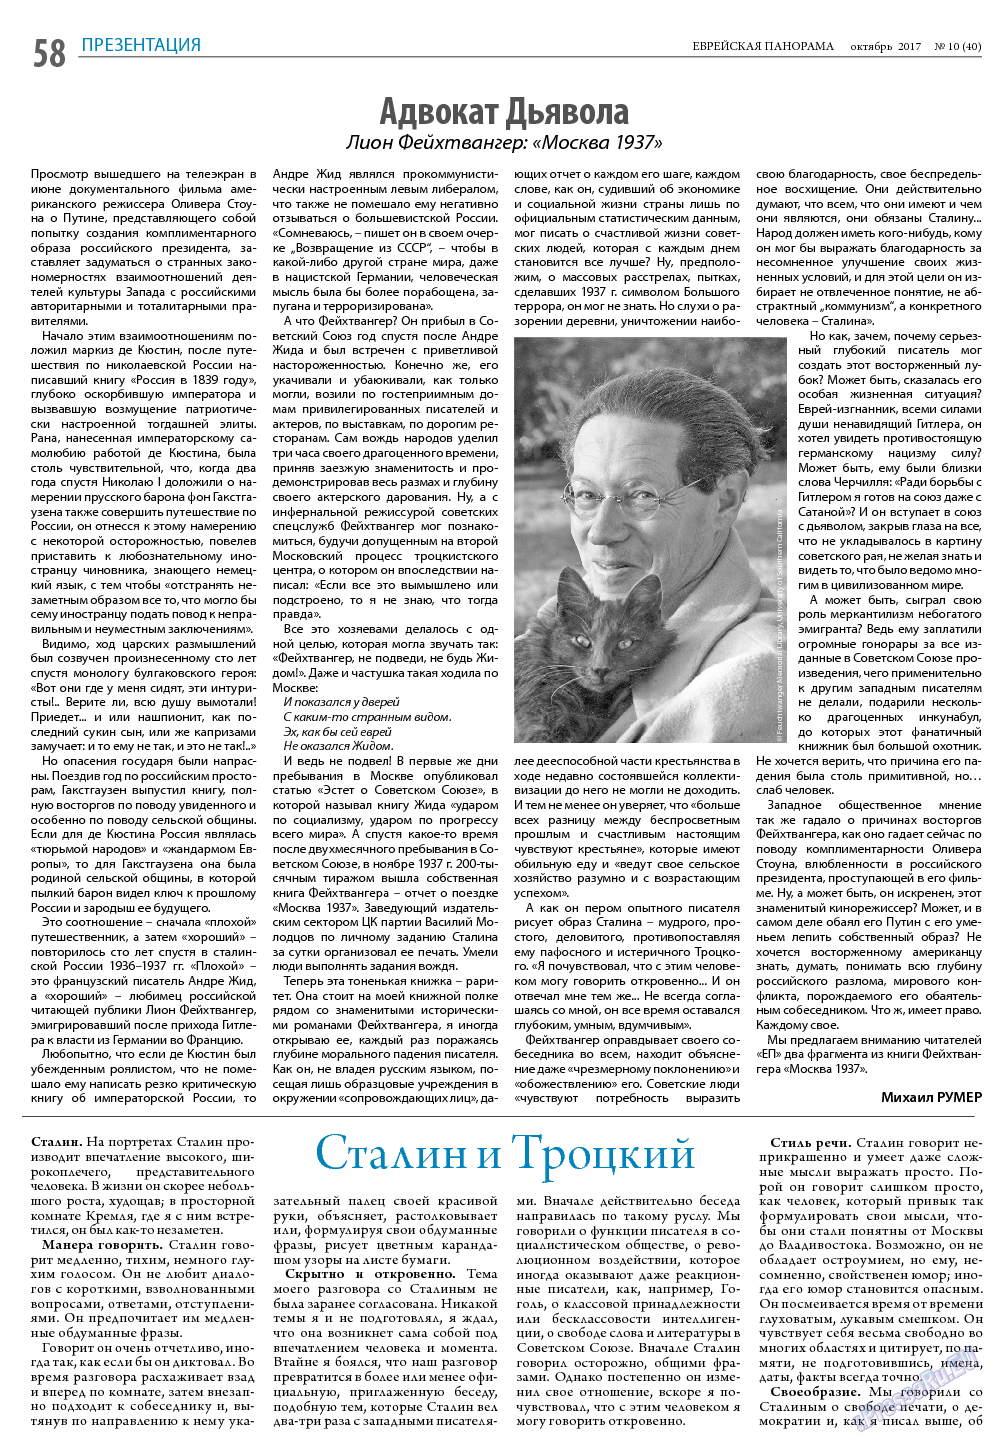 Еврейская панорама, газета. 2017 №10 стр.58